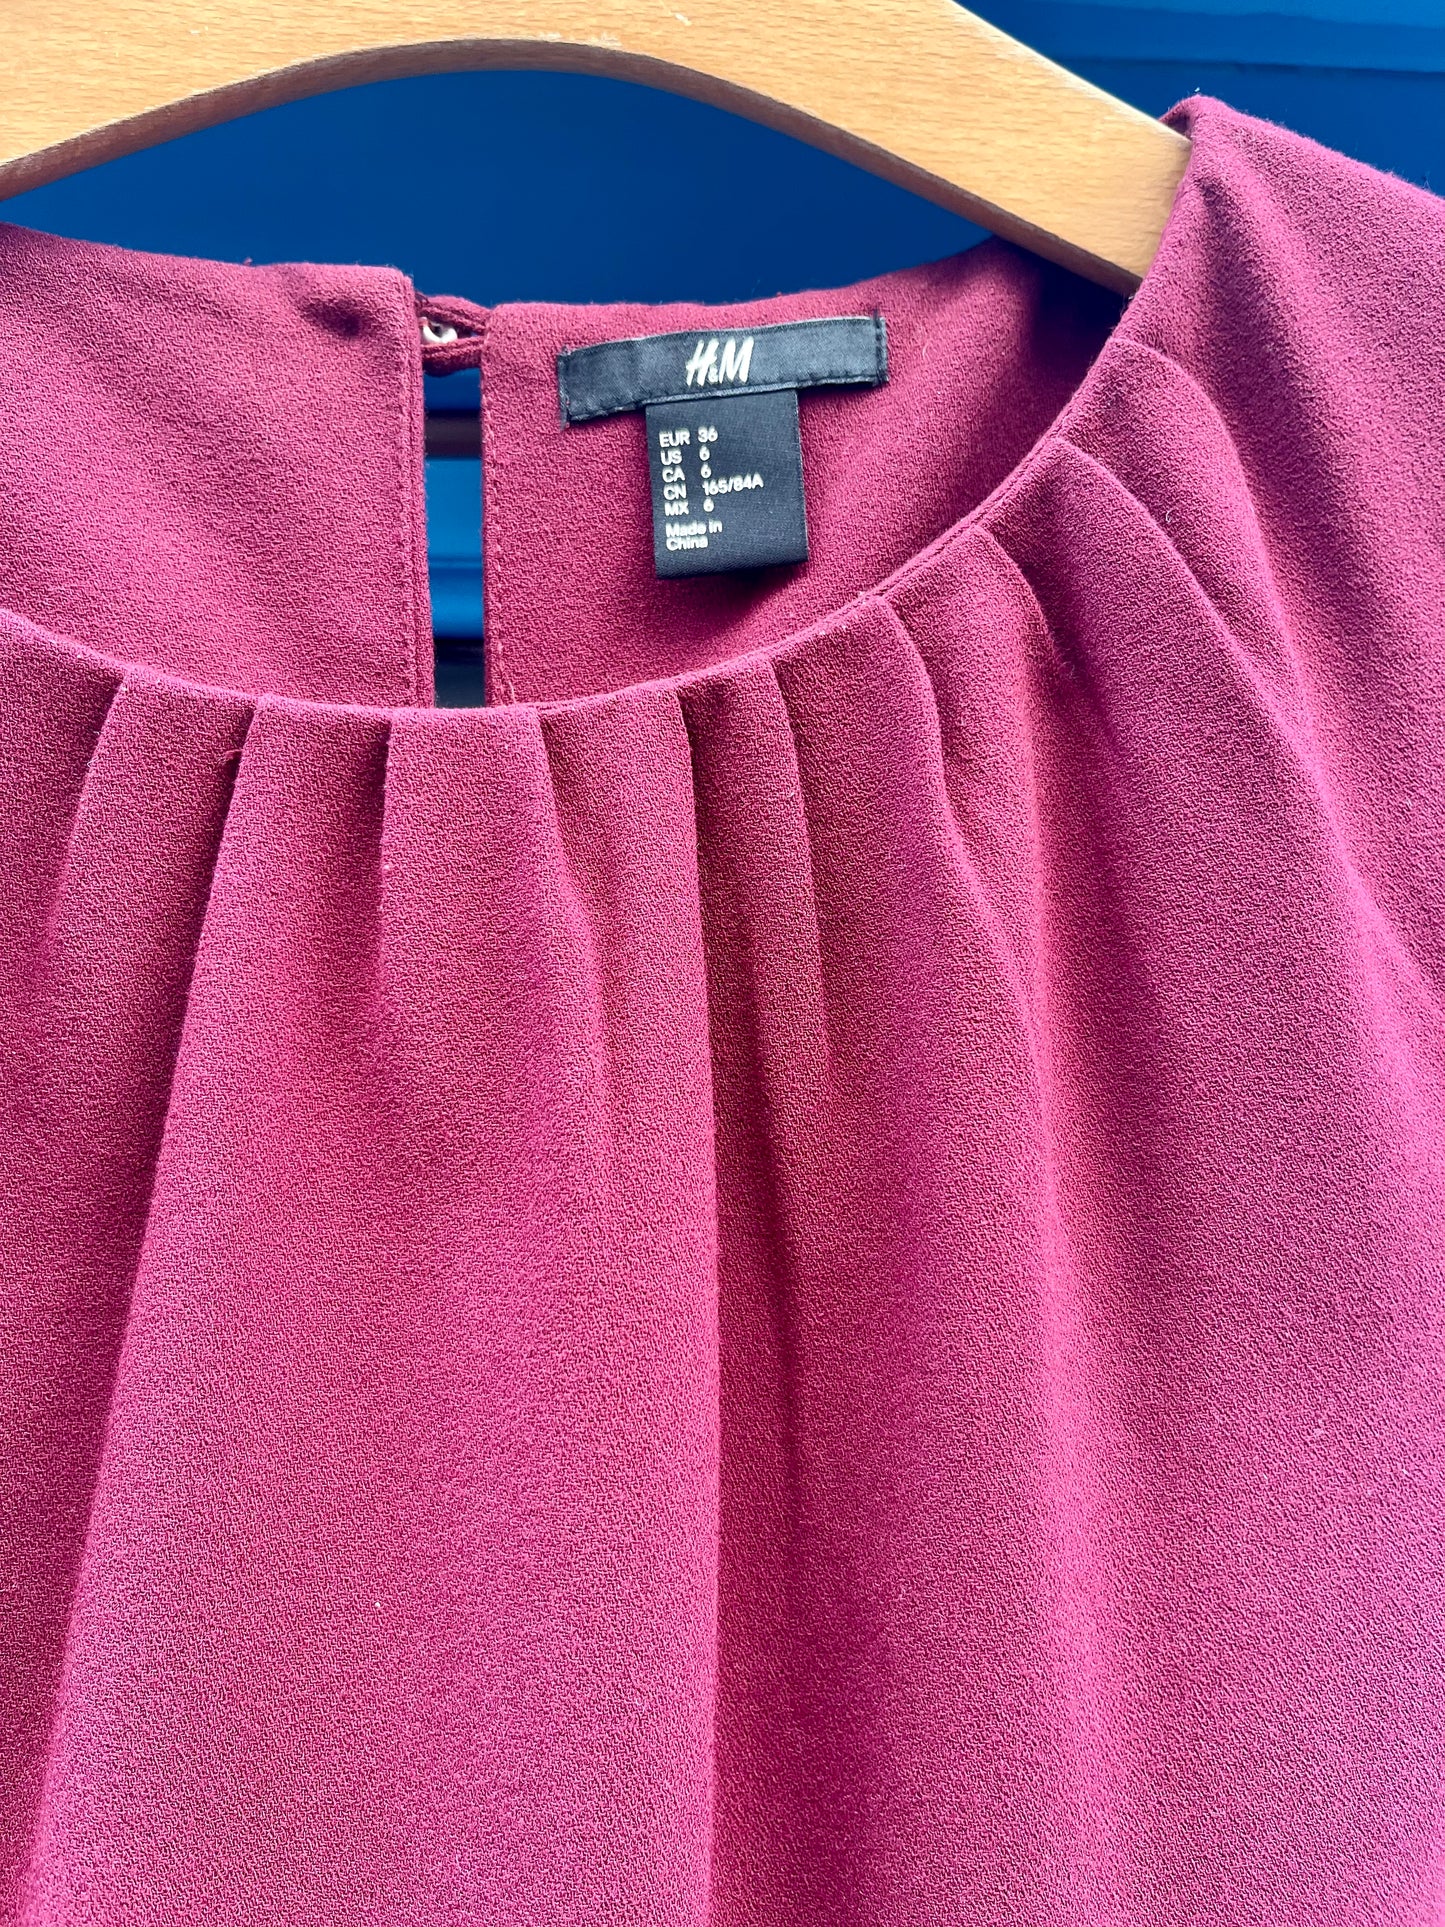 La robe, H&M, taille 36